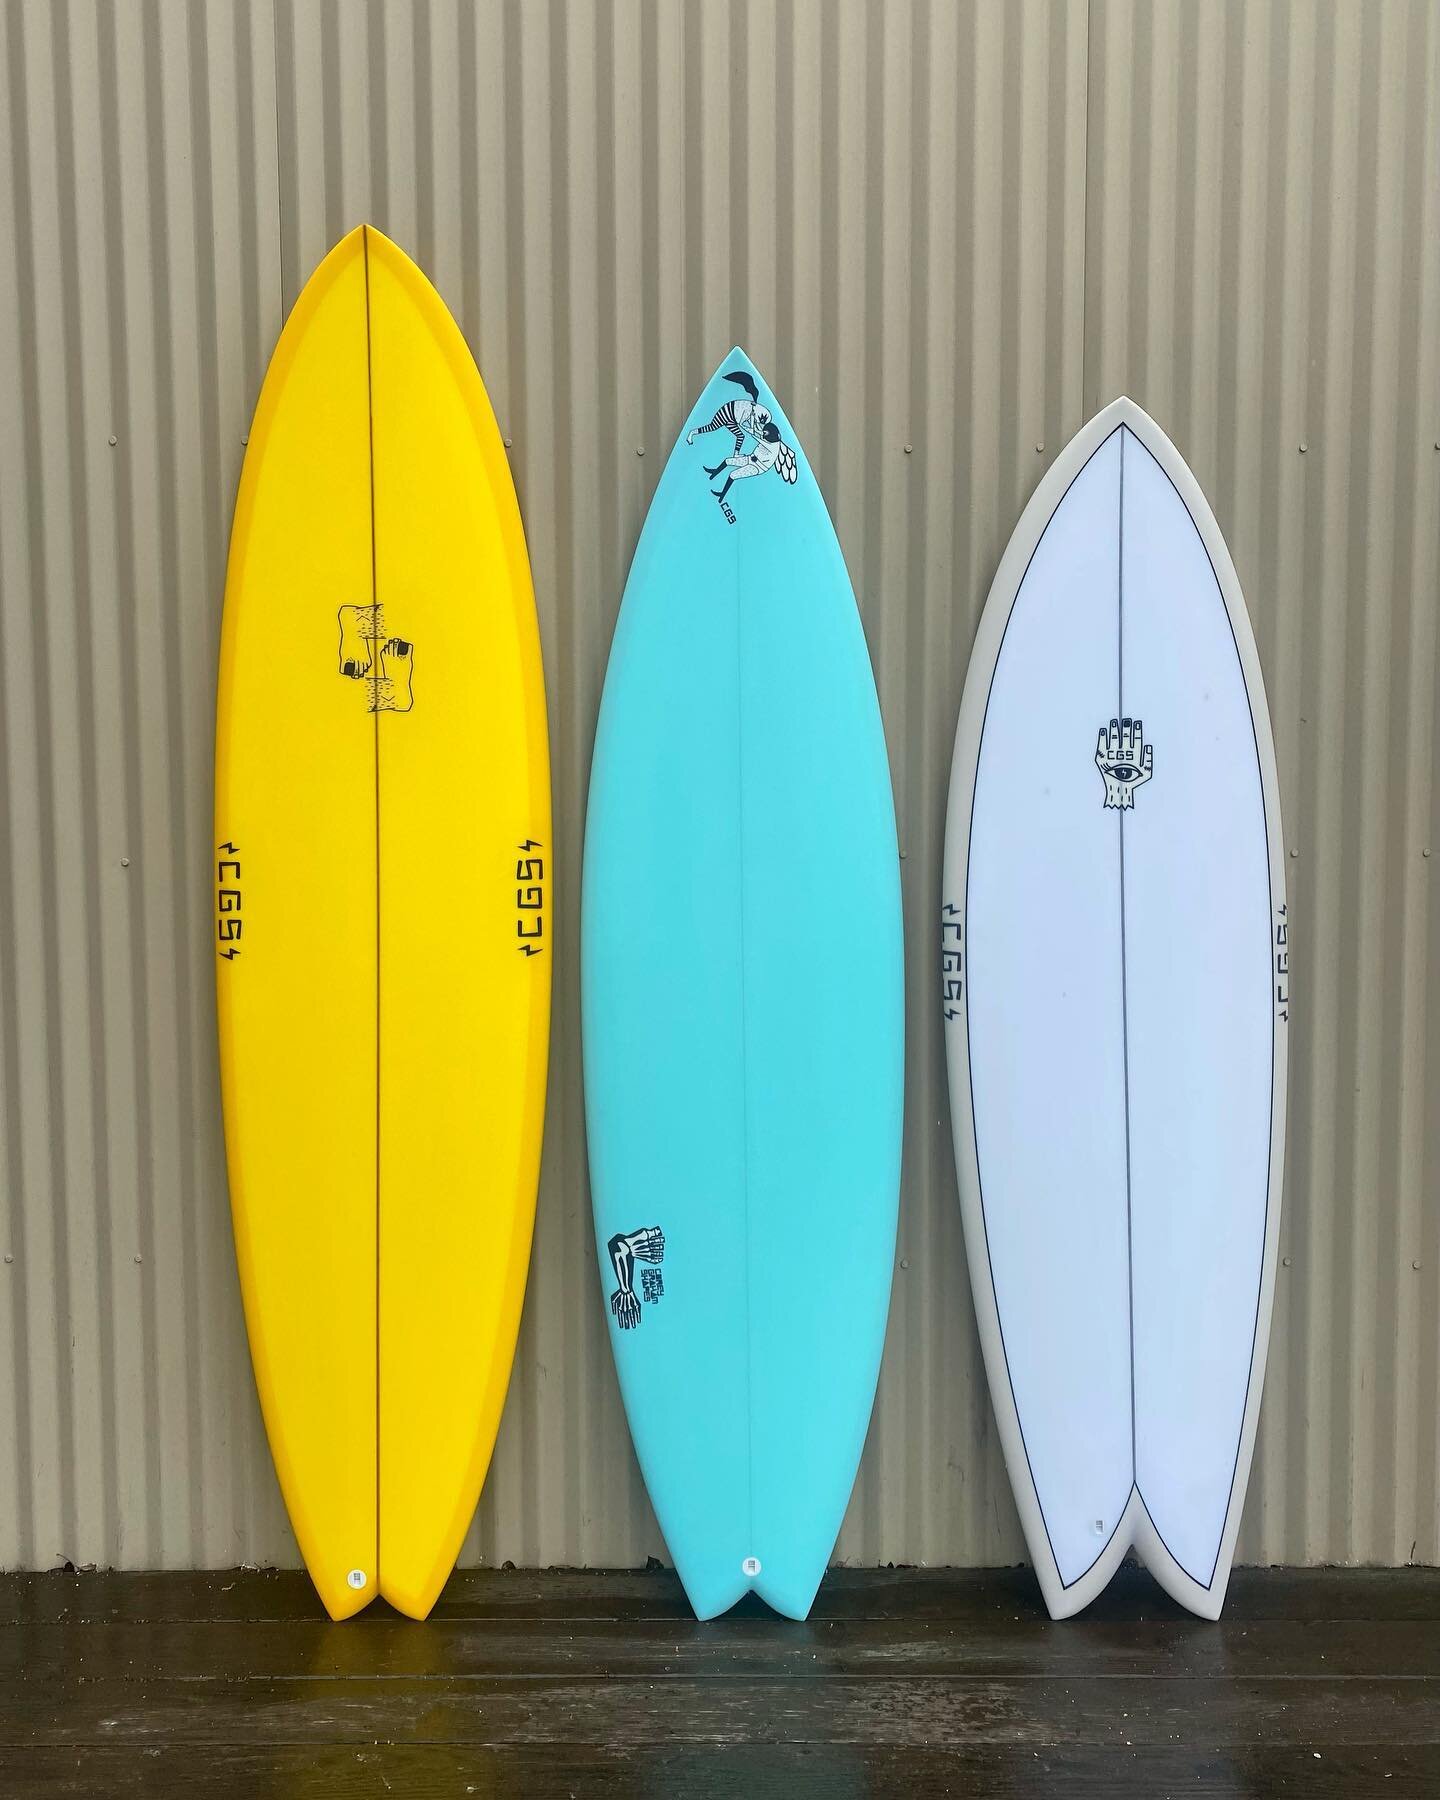 FCD Surfboards